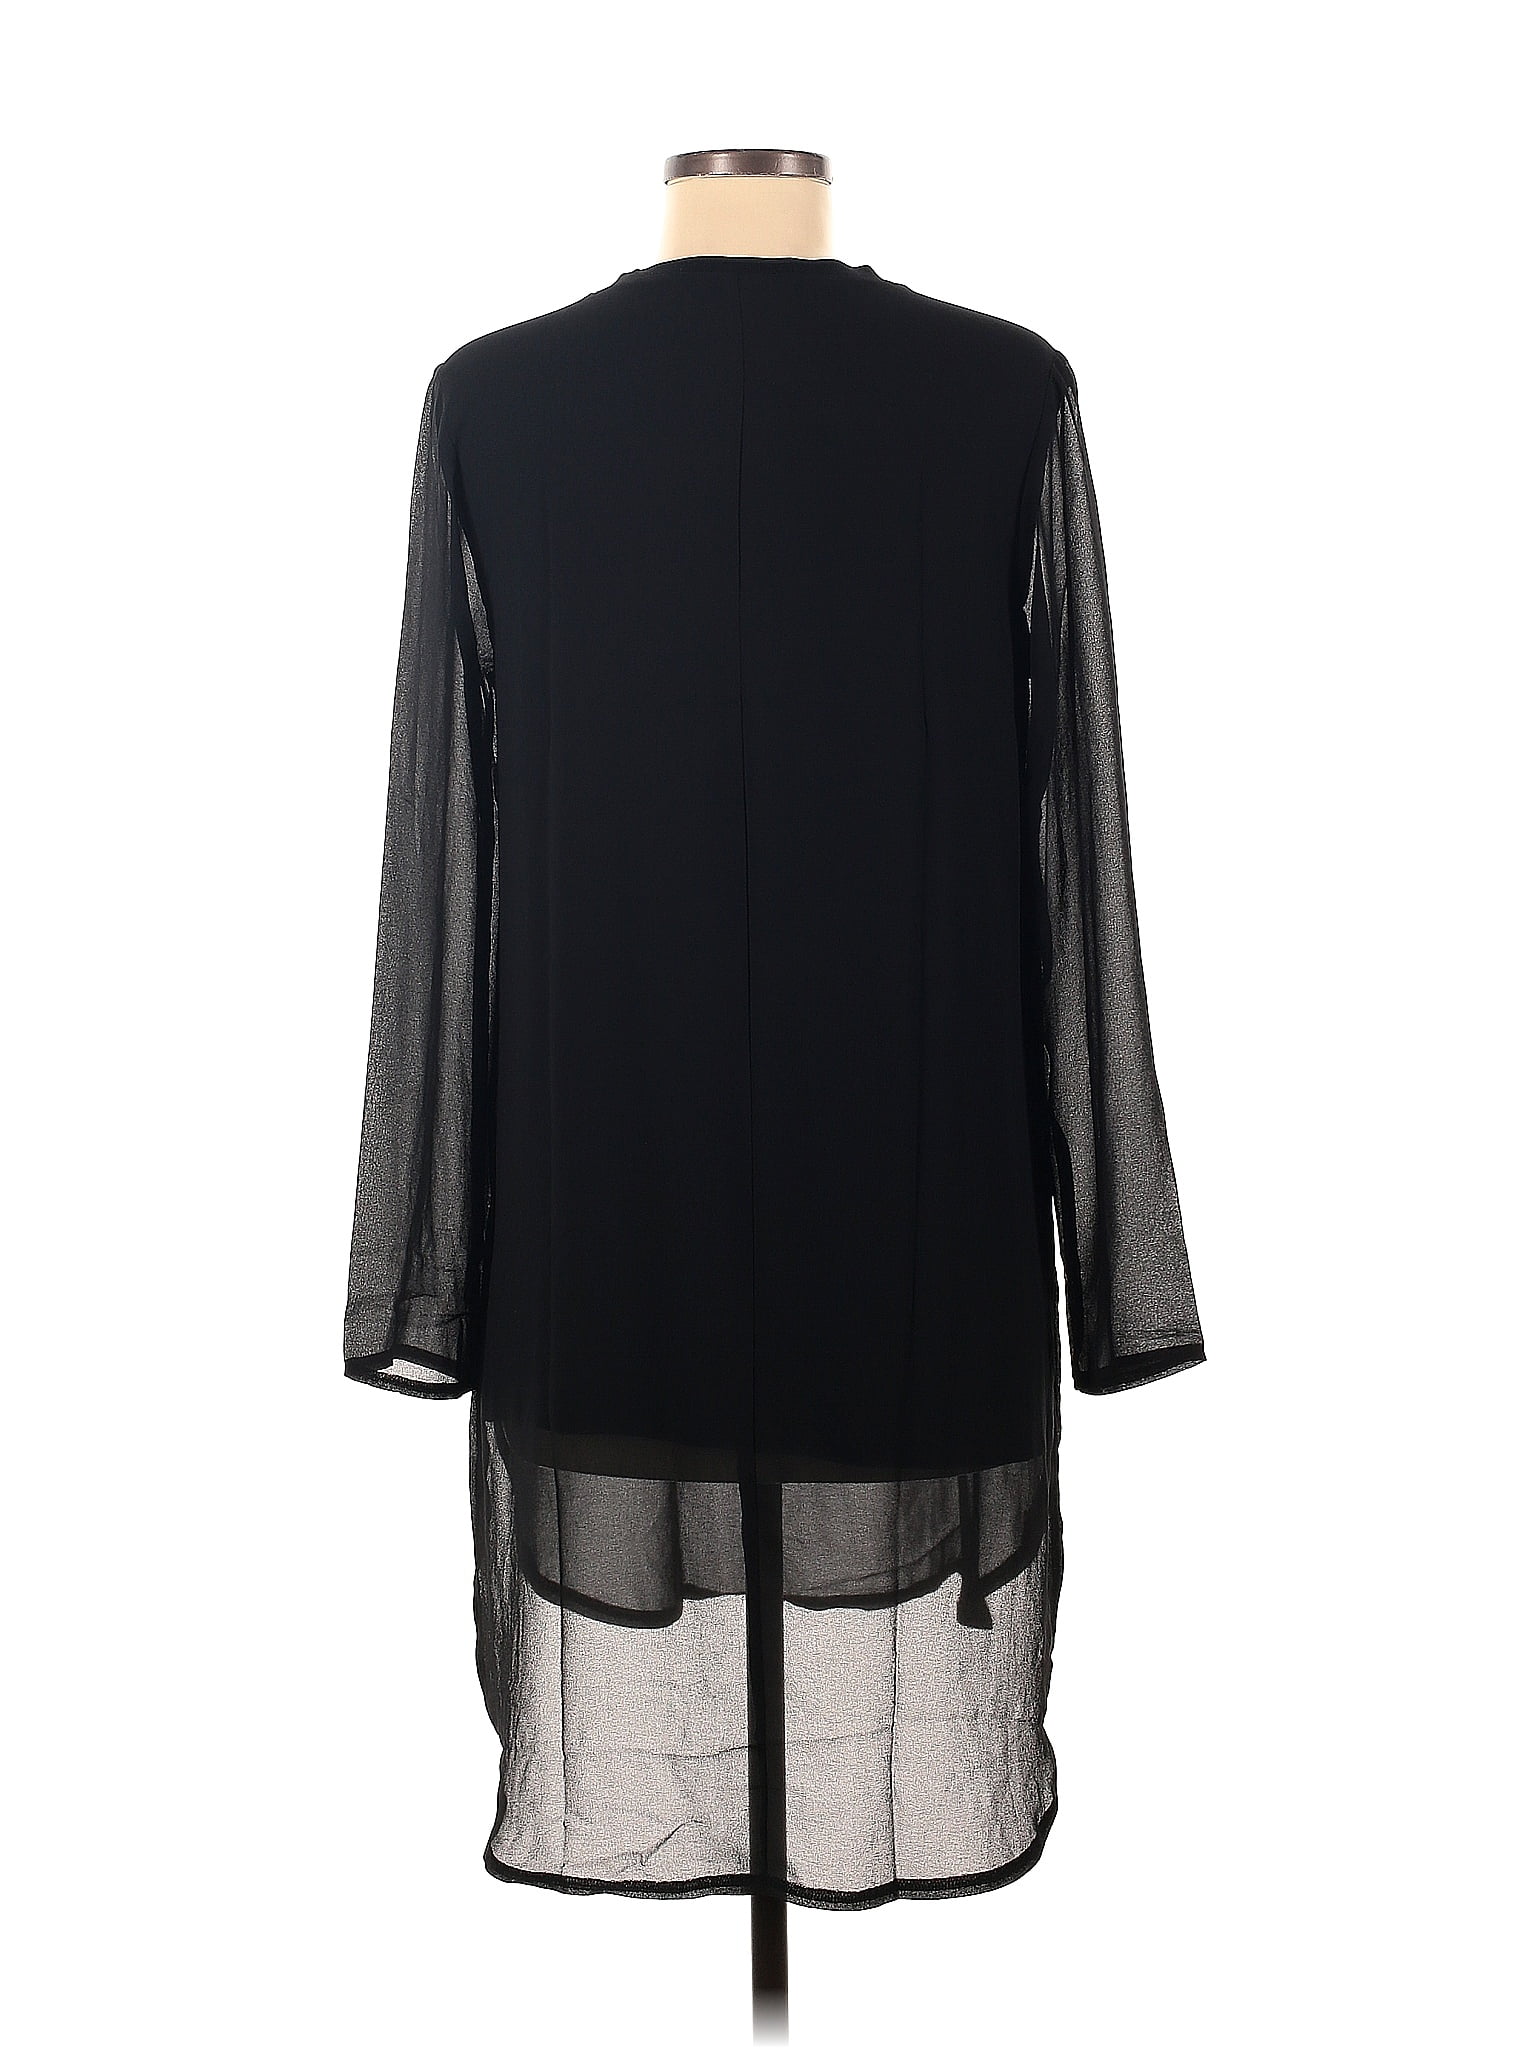 Esmara by Heidi Klum 100% Polyester Solid Black Casual Dress Size